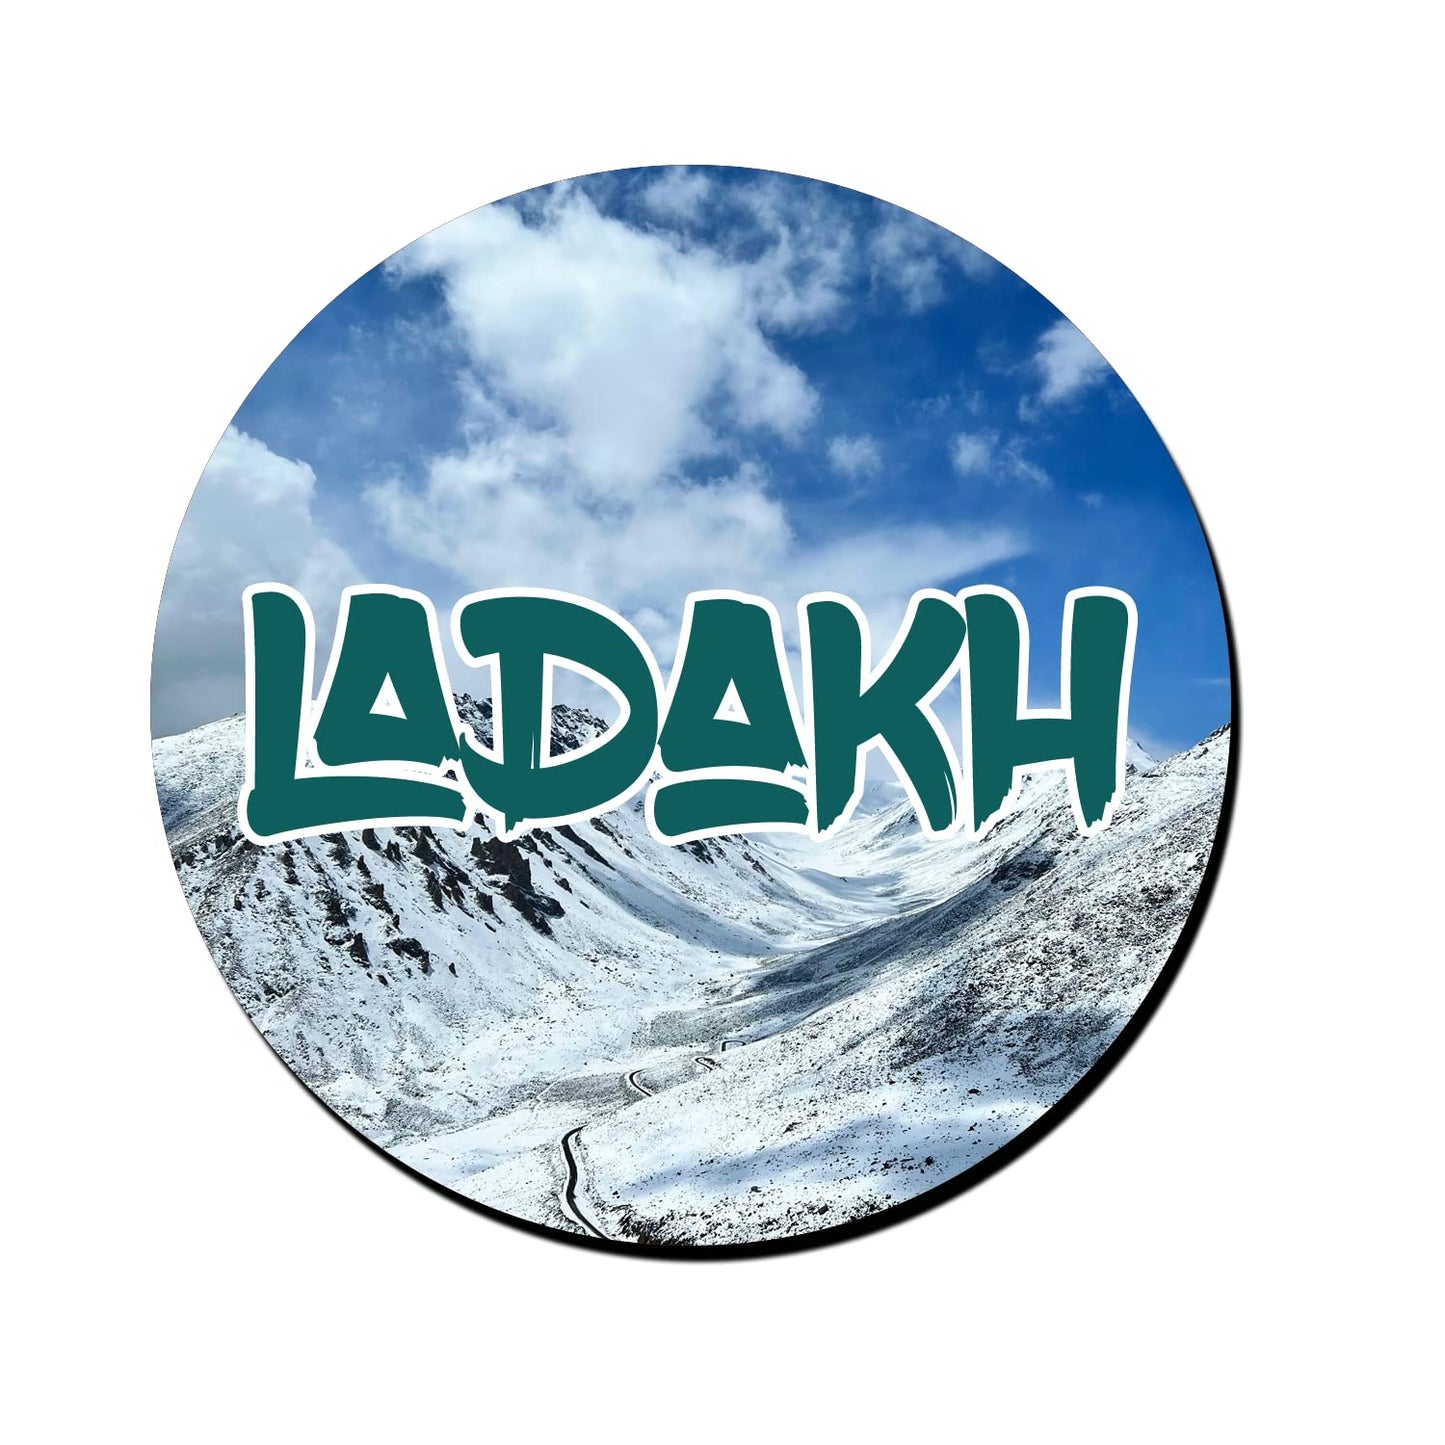 ShopTwiz Ladakh Picture Decorative Large Fridge Magnet